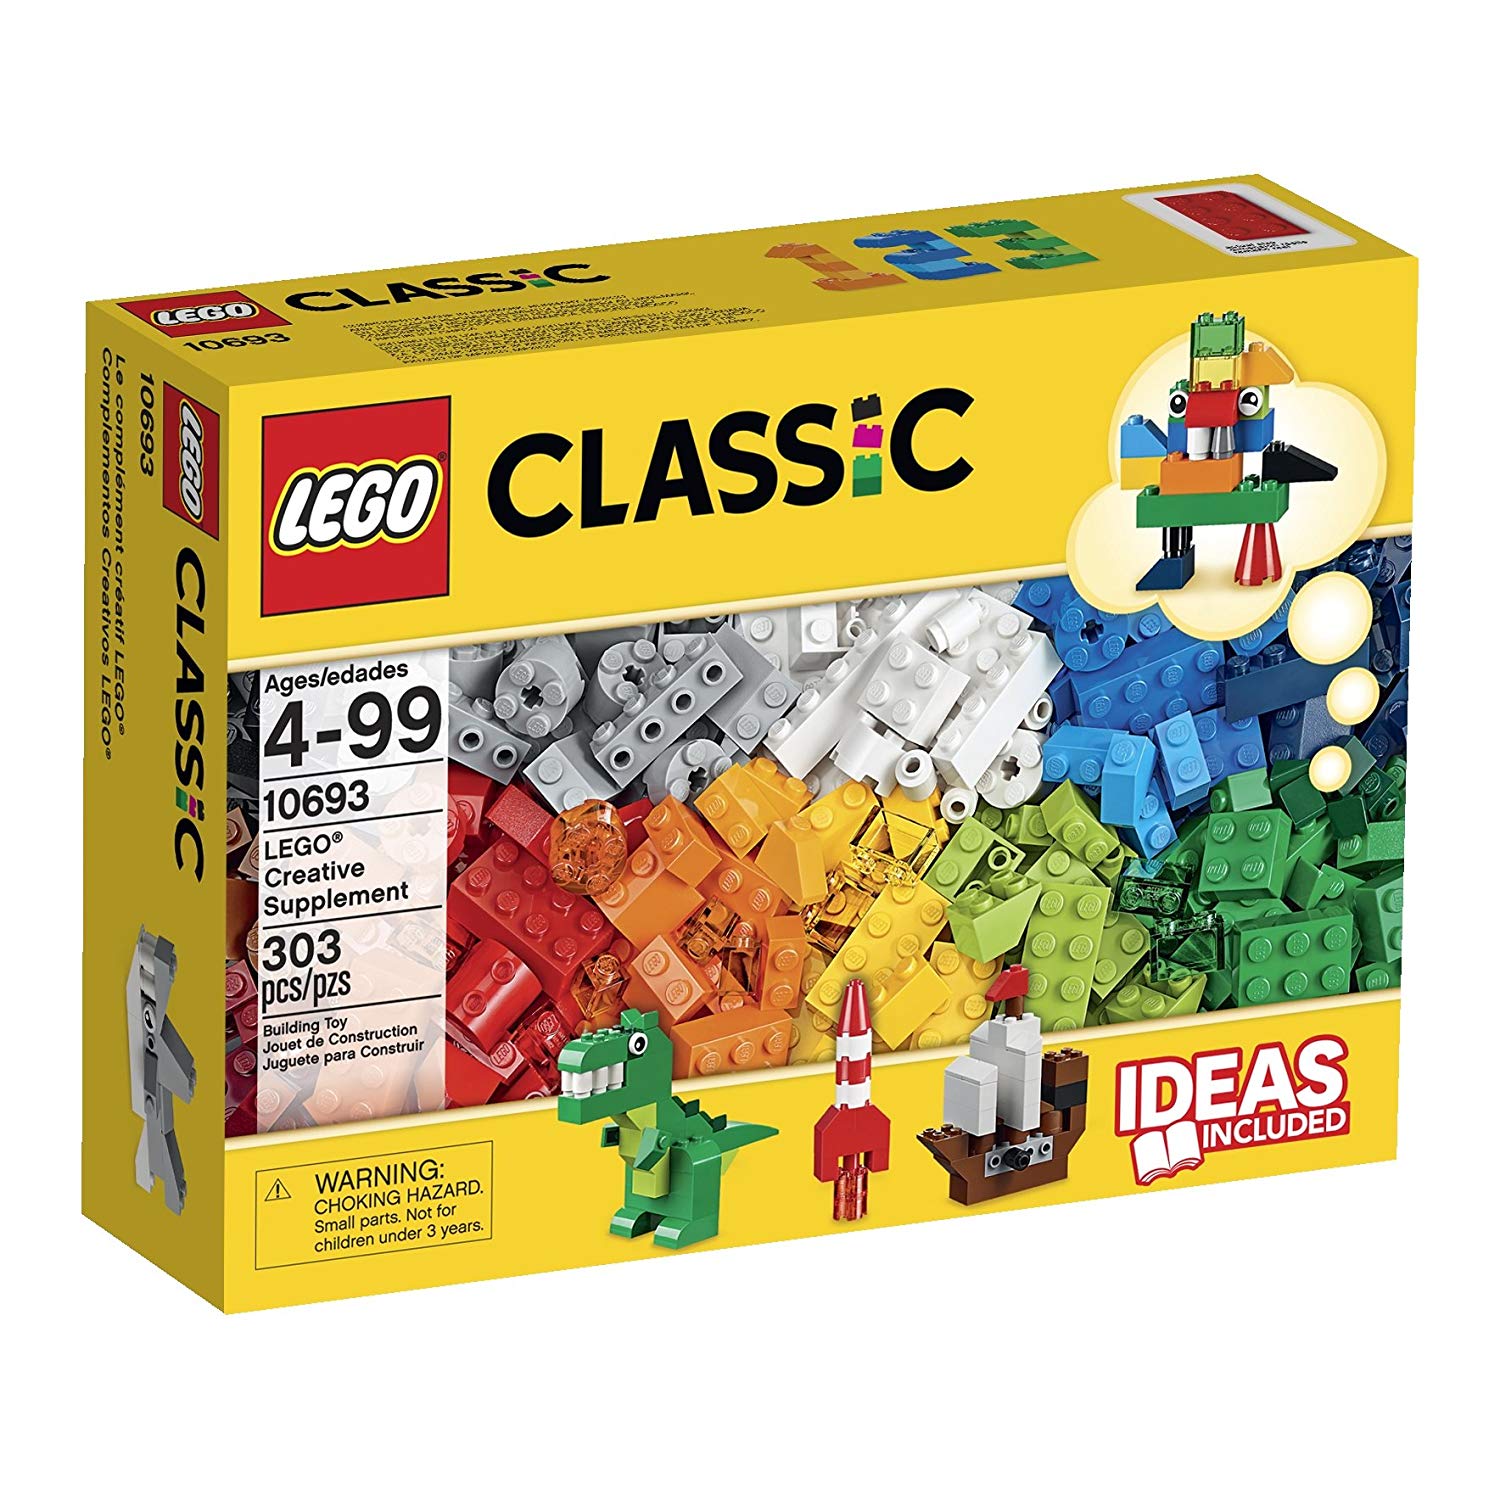 LEGO Classic Creative Supplement 10693 – Just $10.88! PRICE DROP!